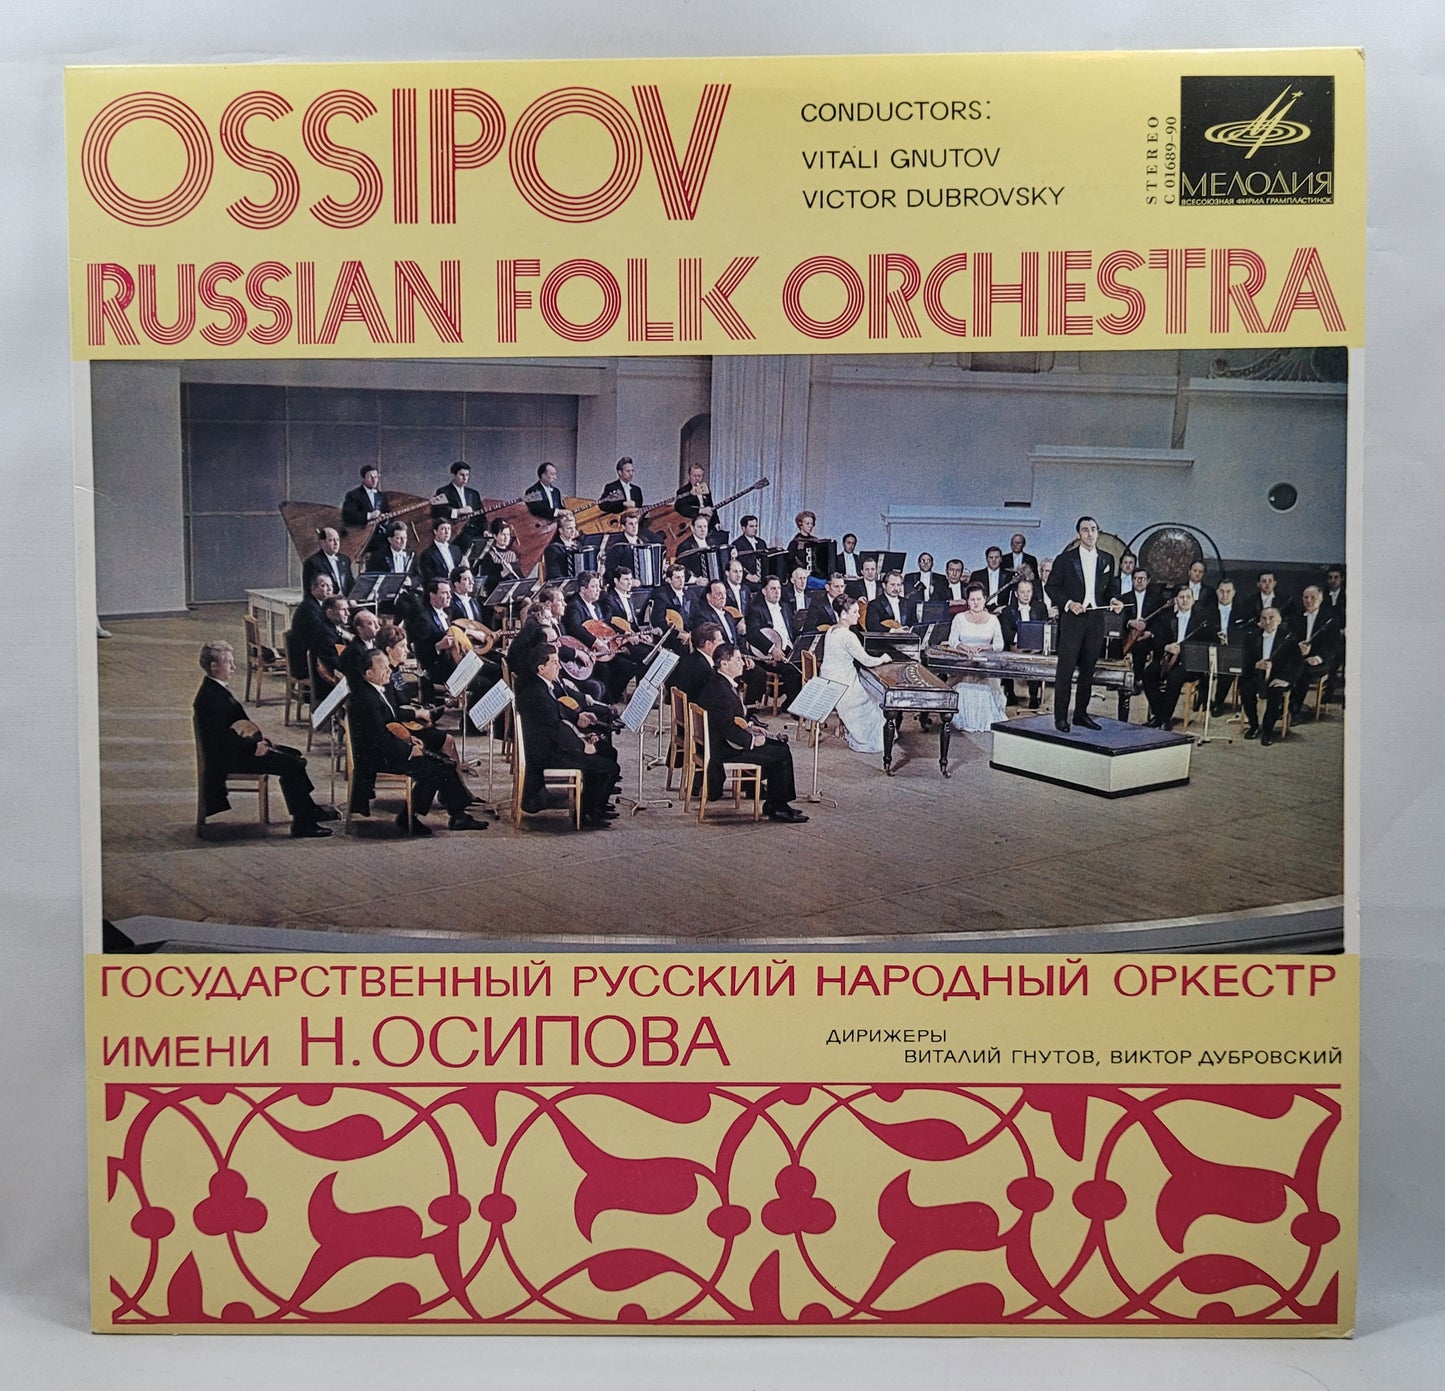 Ossipov Russian Folk Orchestra [1969 Used Vinyl Record LP]